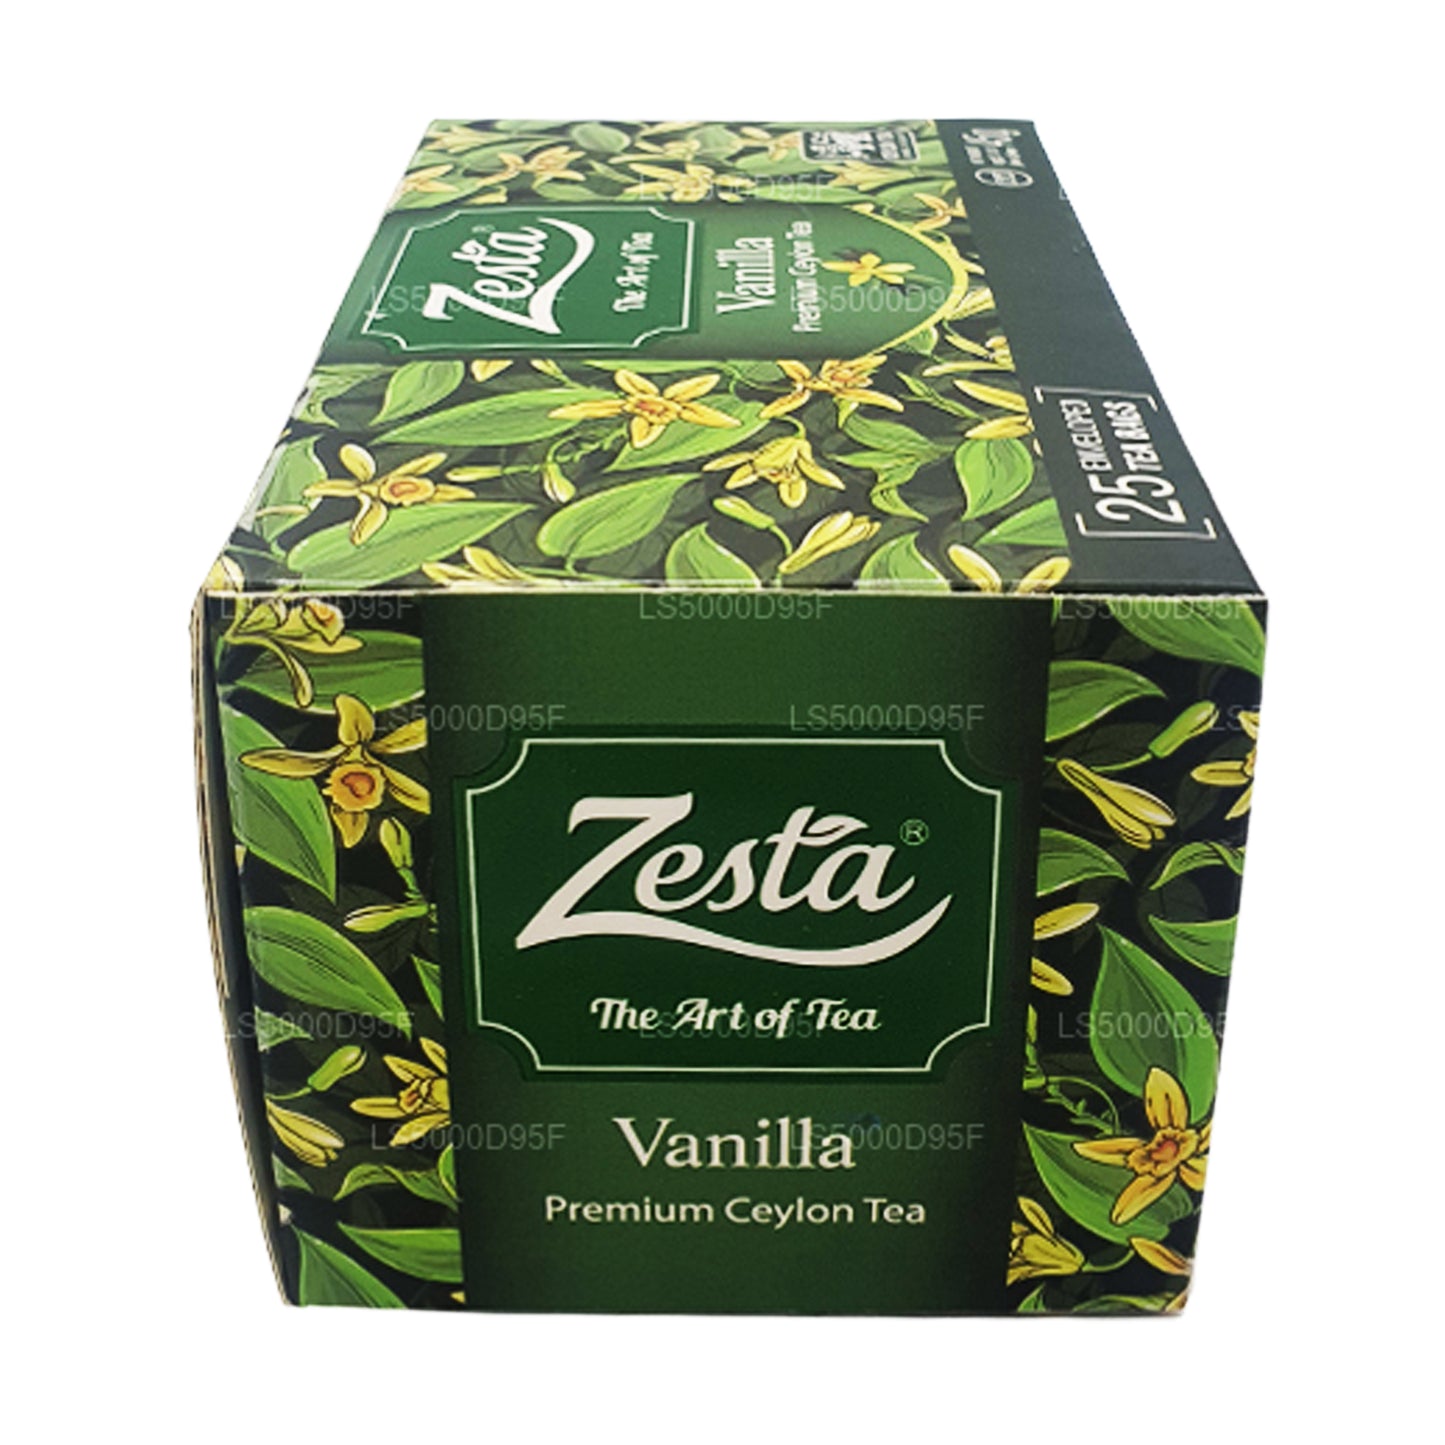 Zesta Vanilla Black Tea (45g) 25 Tea Bags